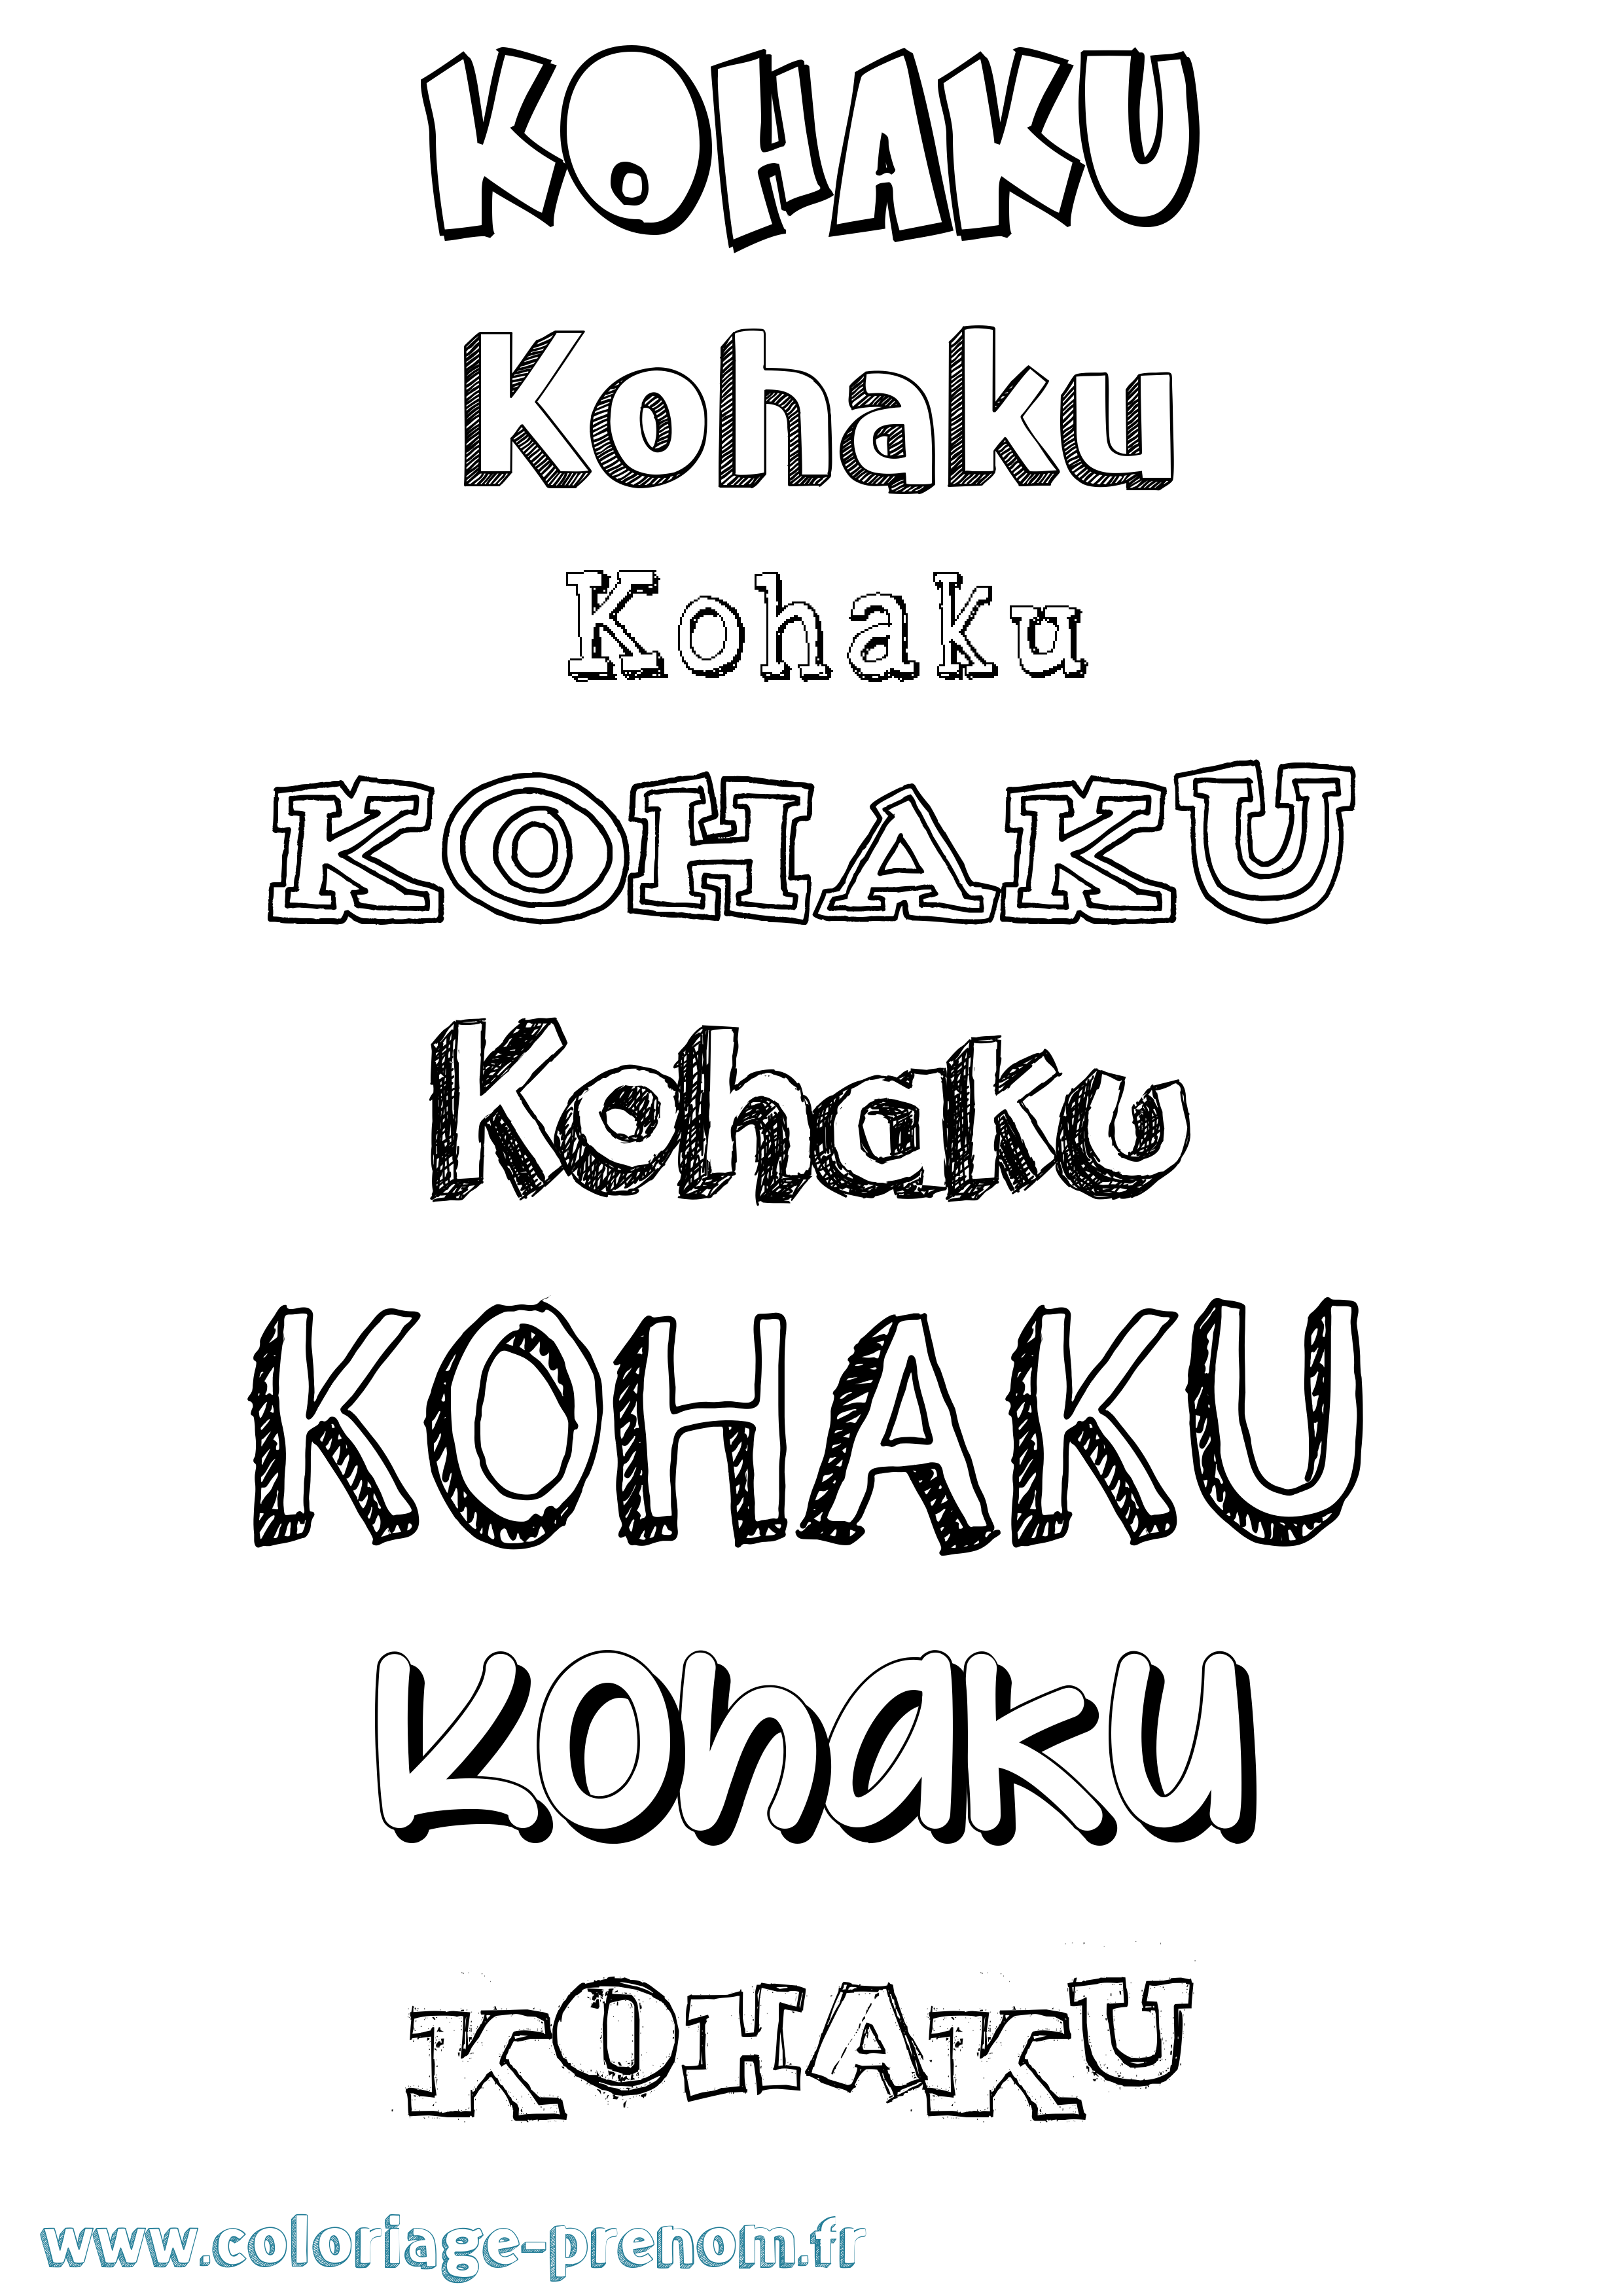 Coloriage prénom Kohaku Dessiné